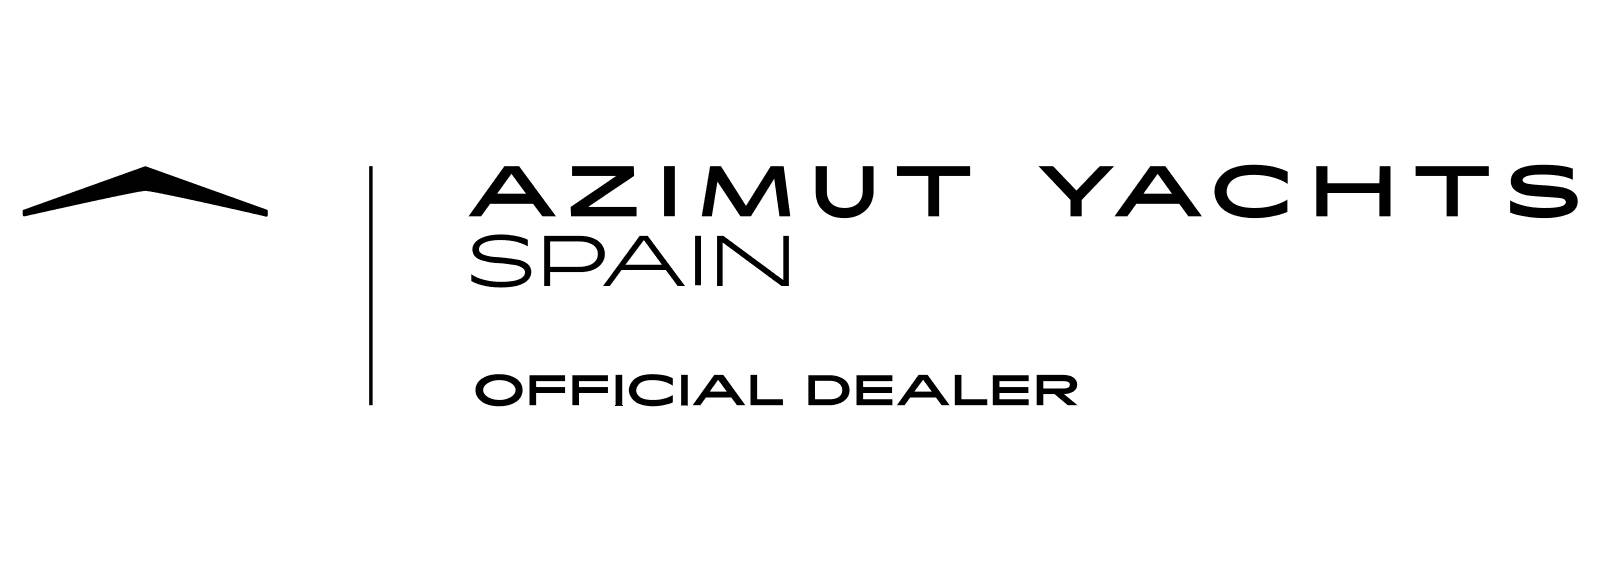 azimut yacht logo